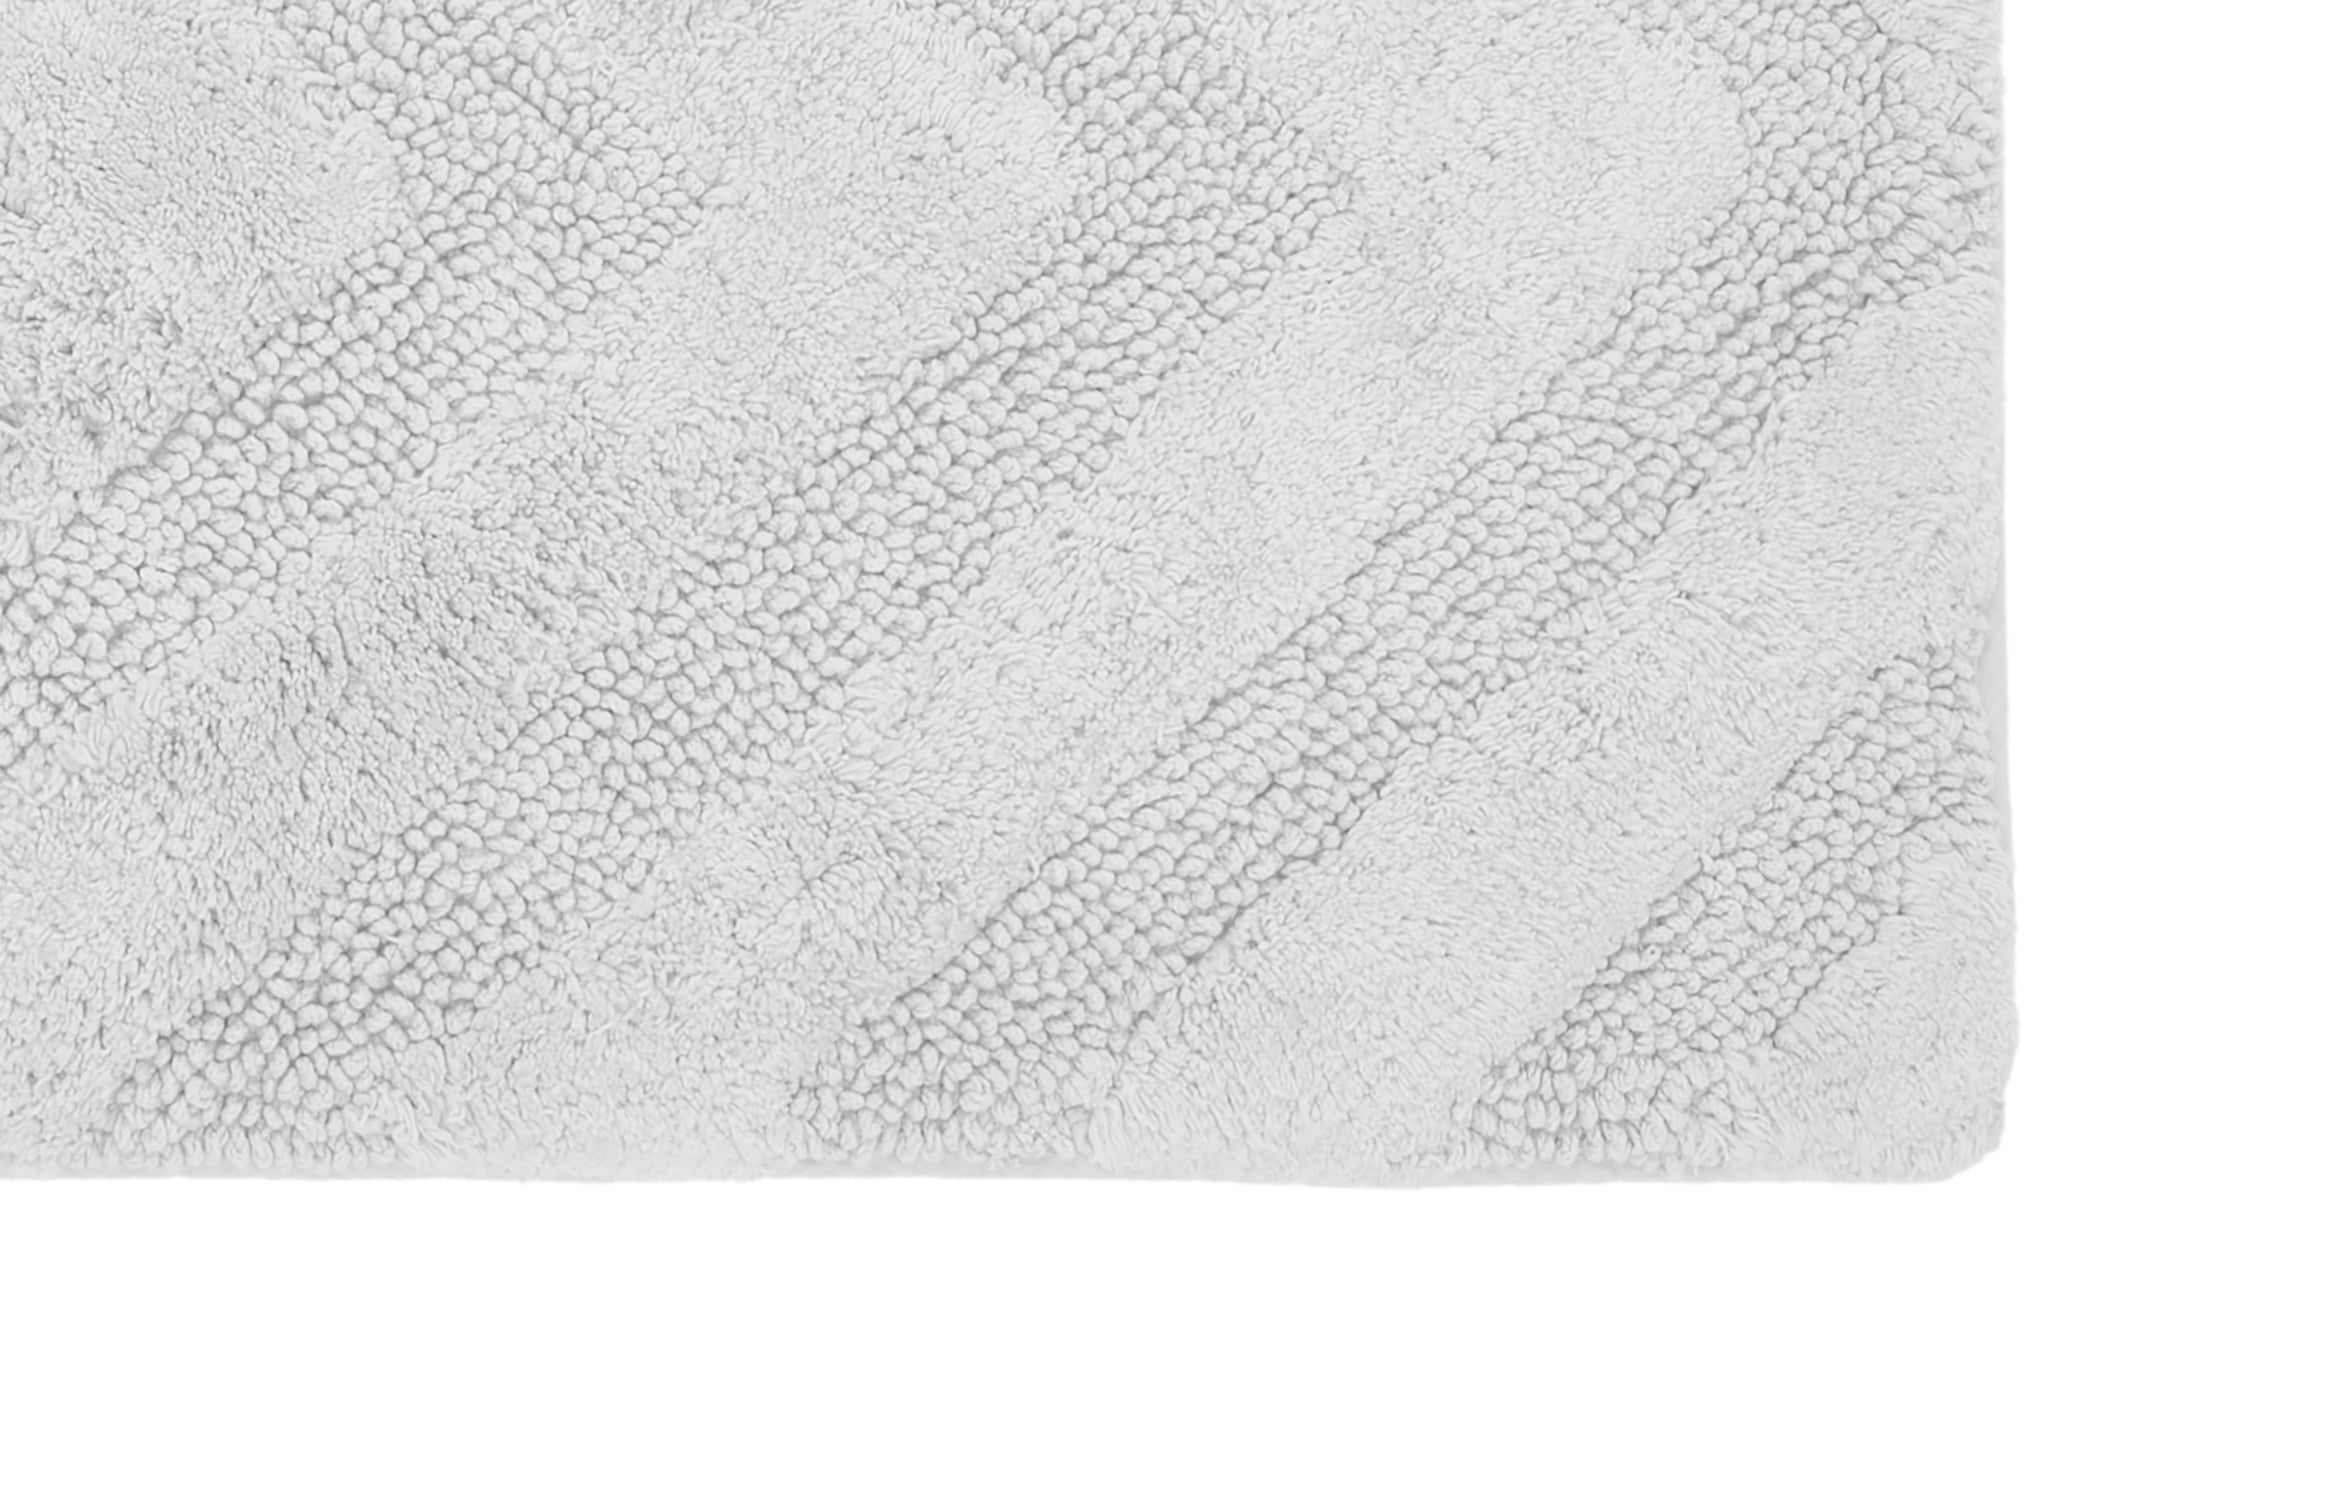 Havanna extra large bath rug - 33.5x59.1in [85x150cm] - Snow White